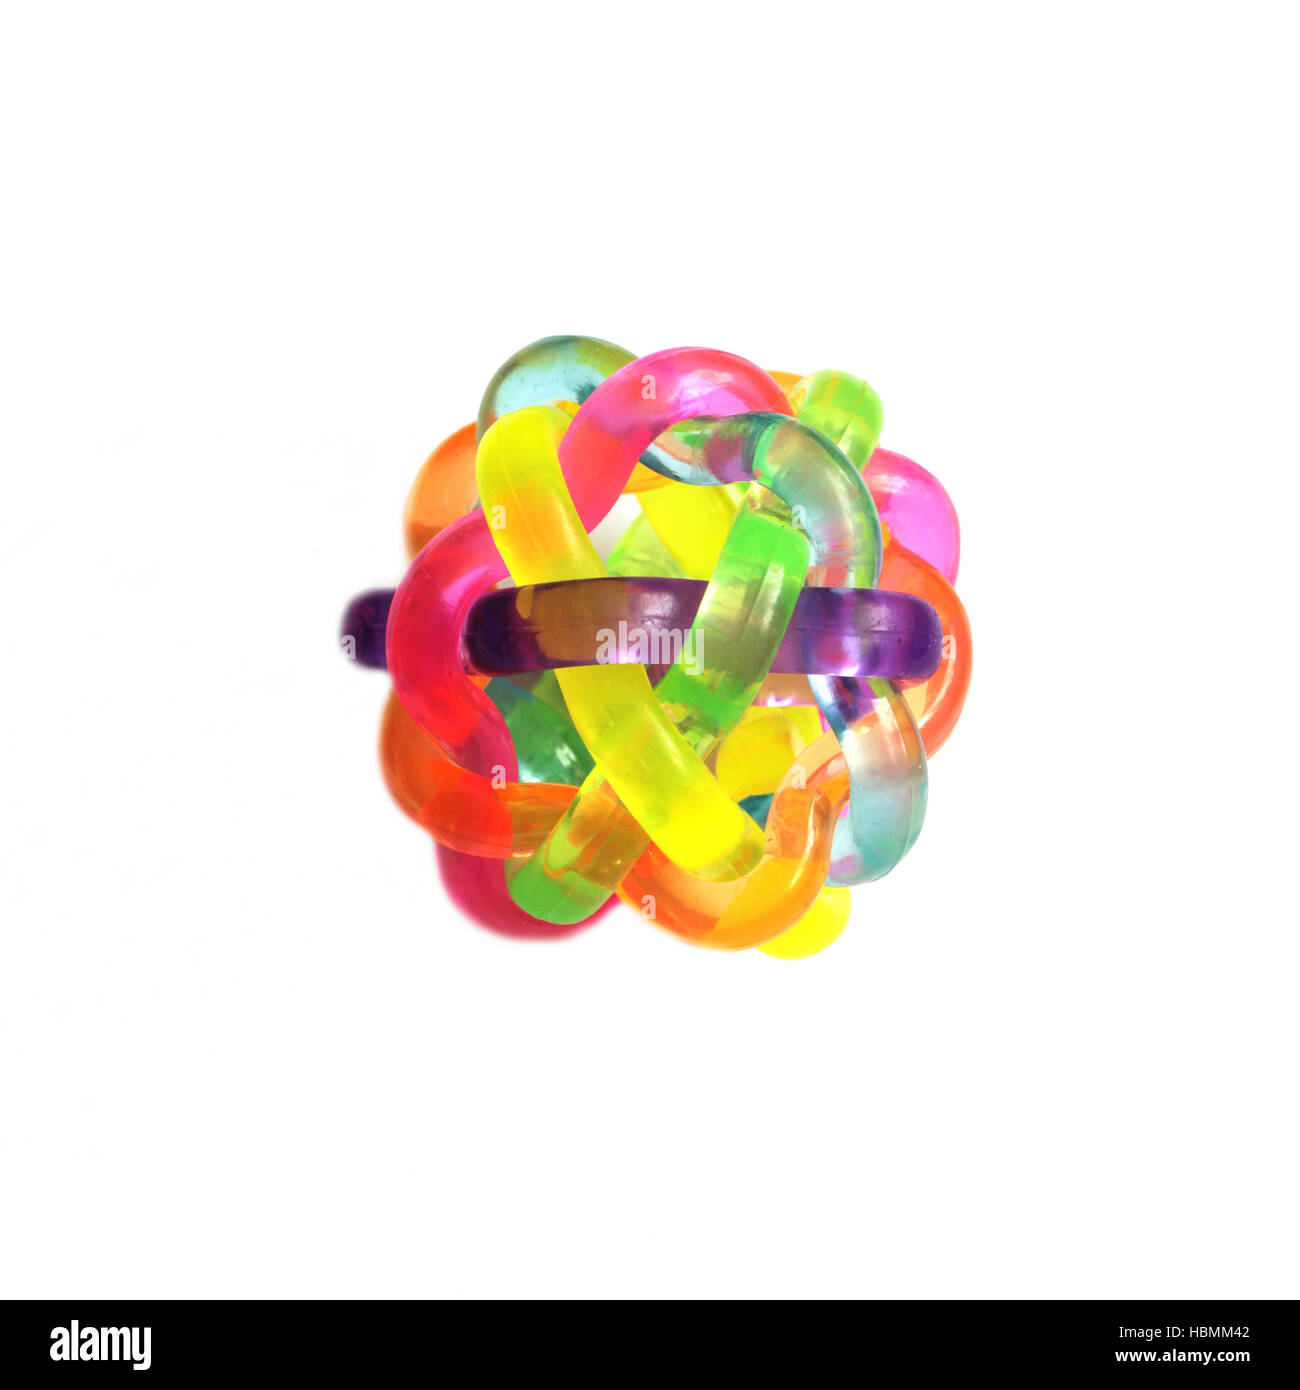 Rubber sensory ball of bright color Stock Photo